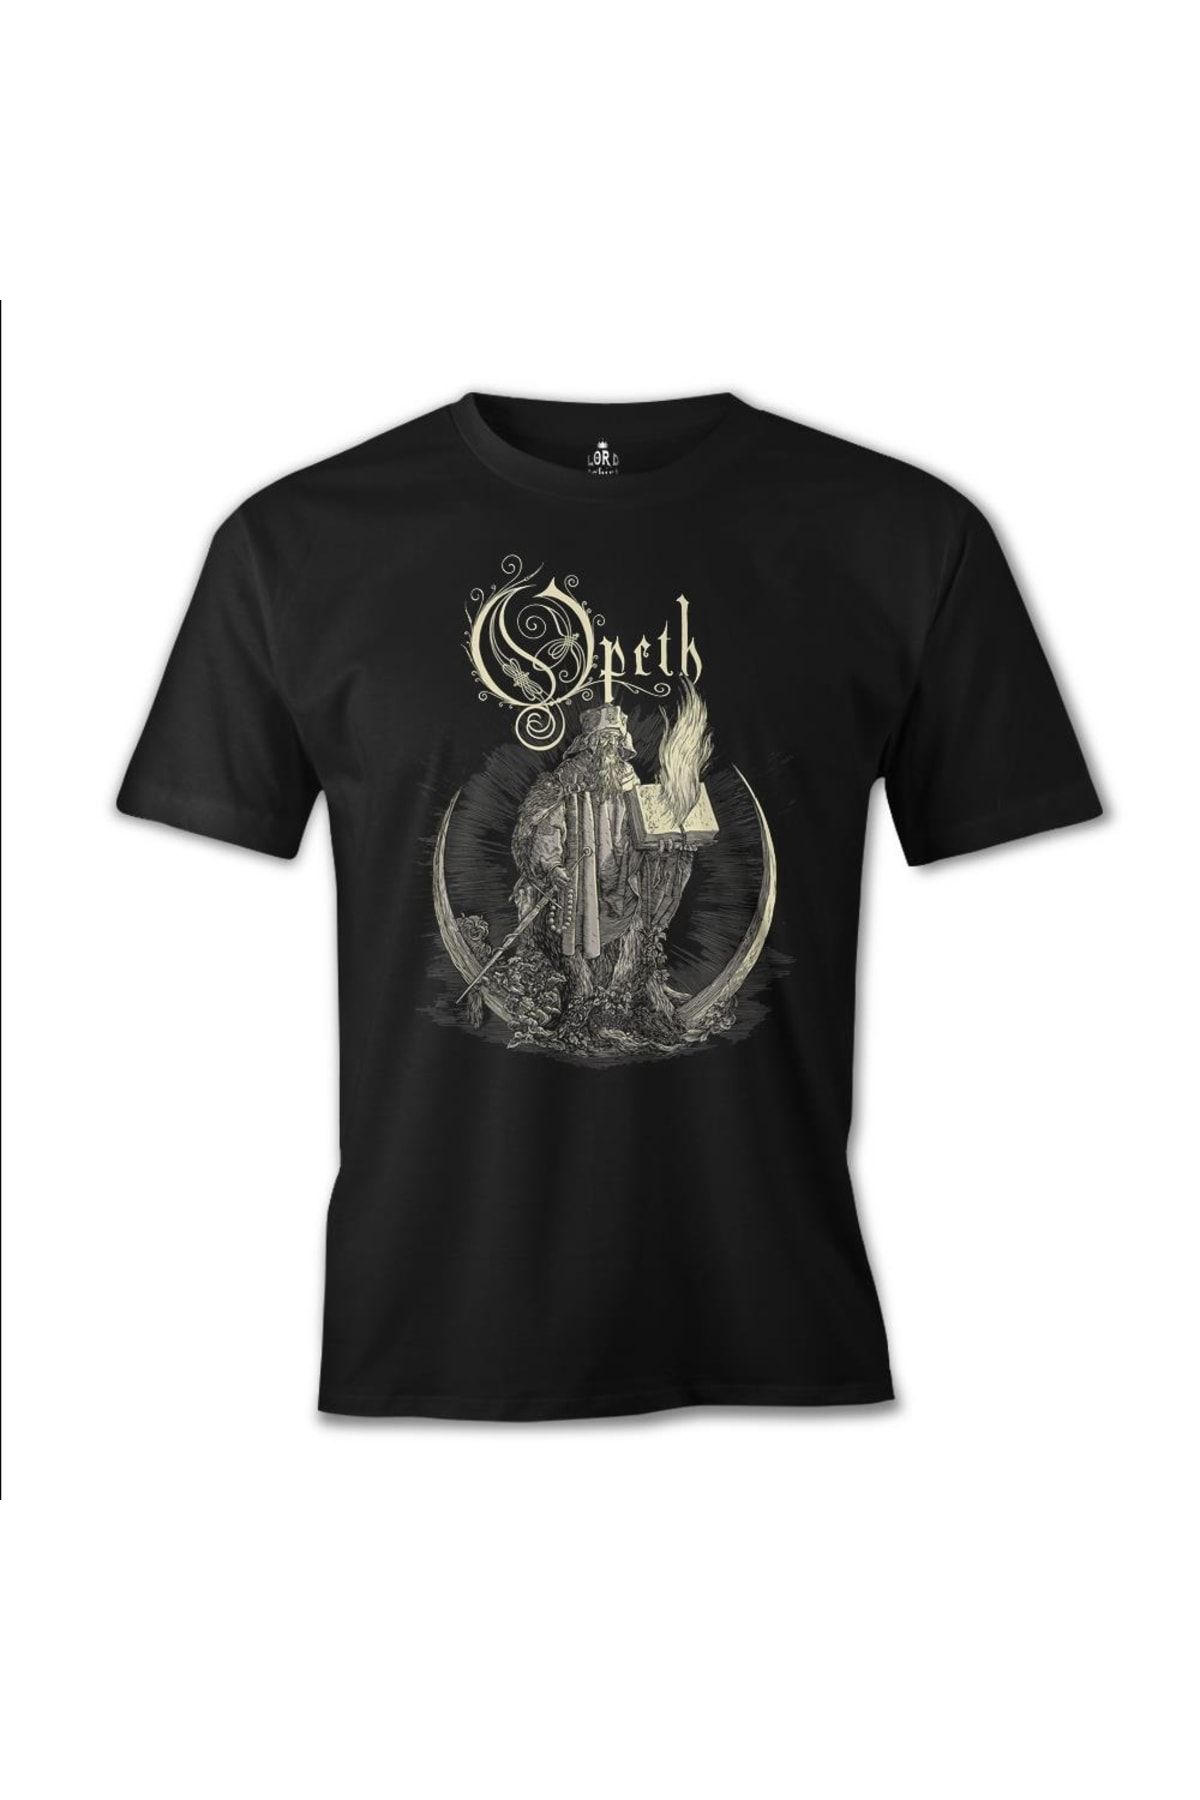 Lord T-Shirt Opeth - Ghost Reveries 2 Siyah Erkek Tshirt